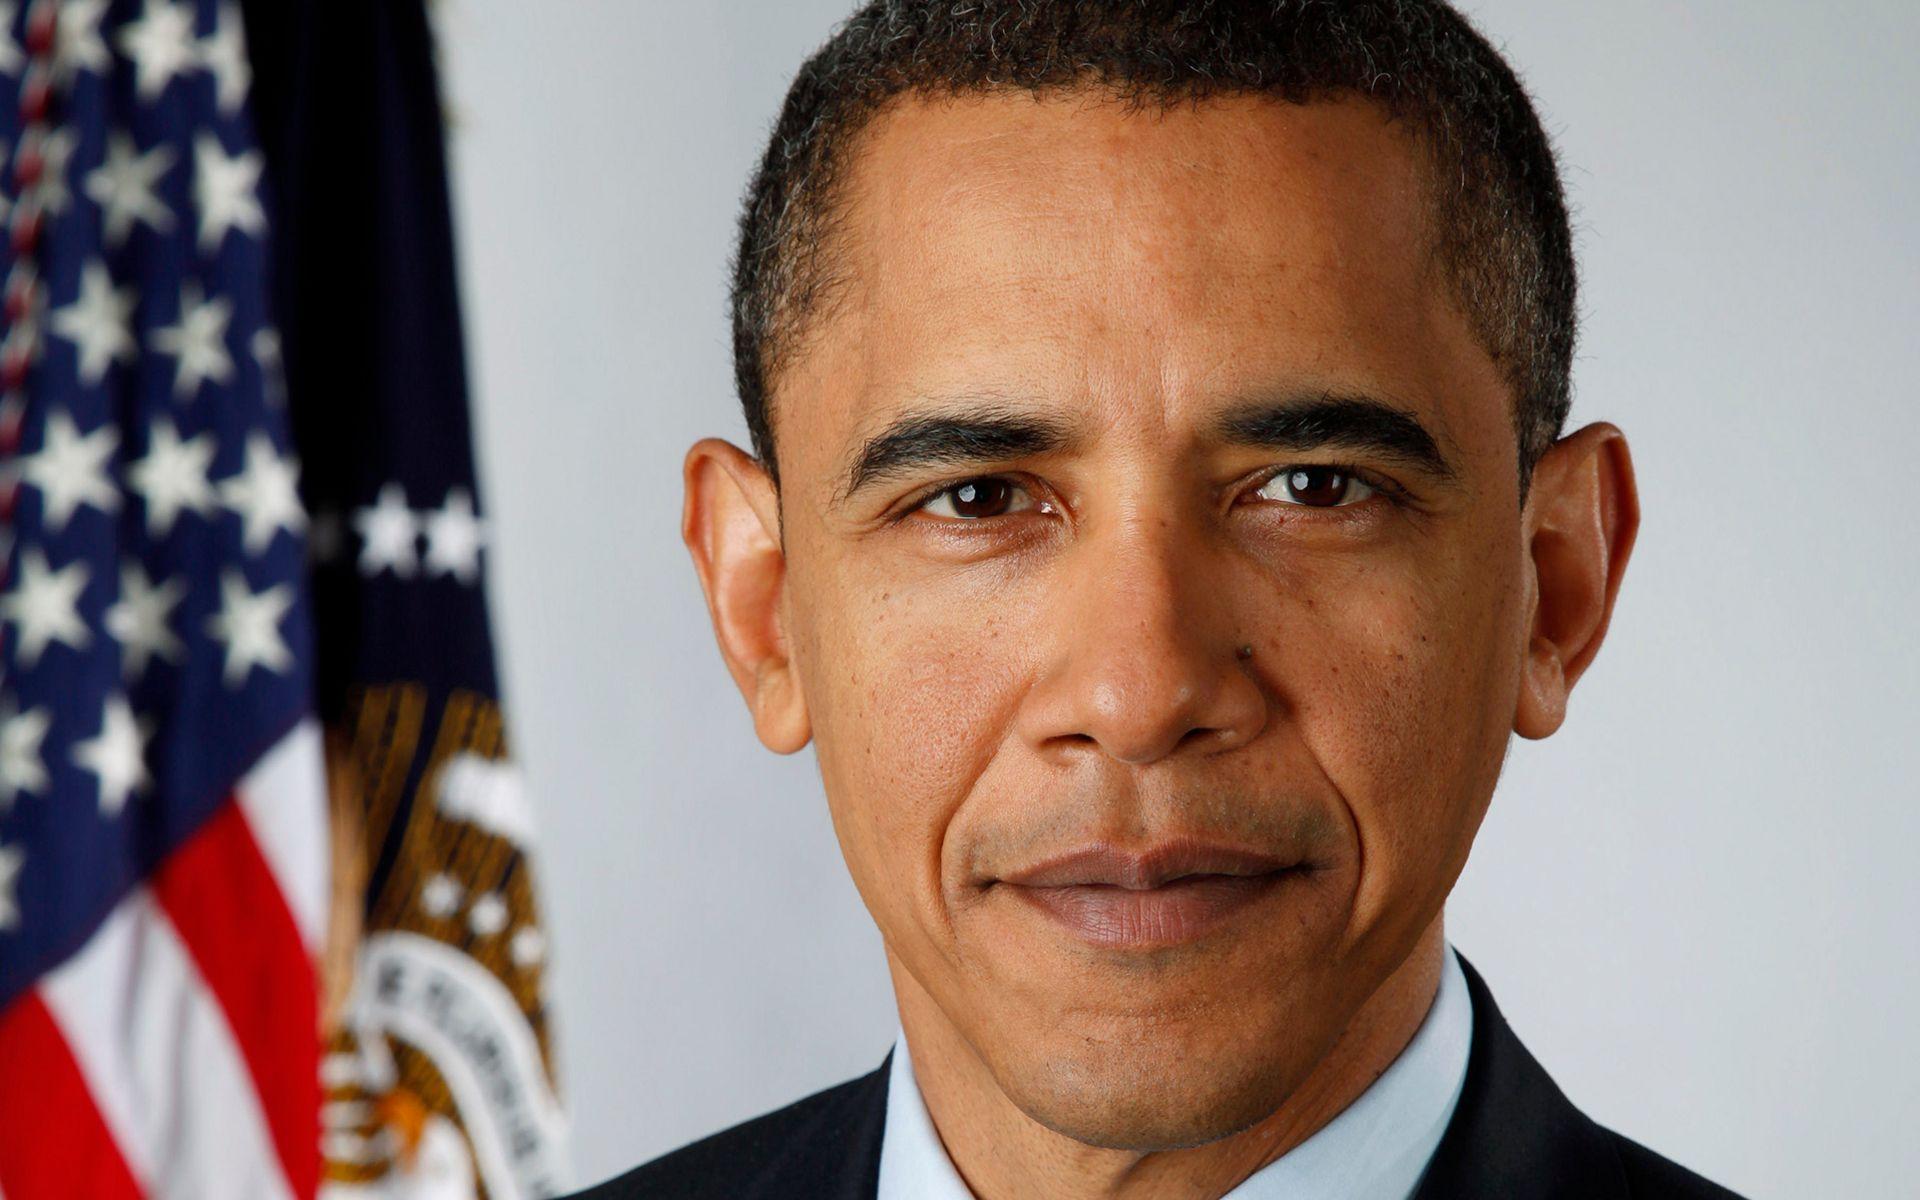 Barack Obama Face Wallpaper 59511 1920x1200 px